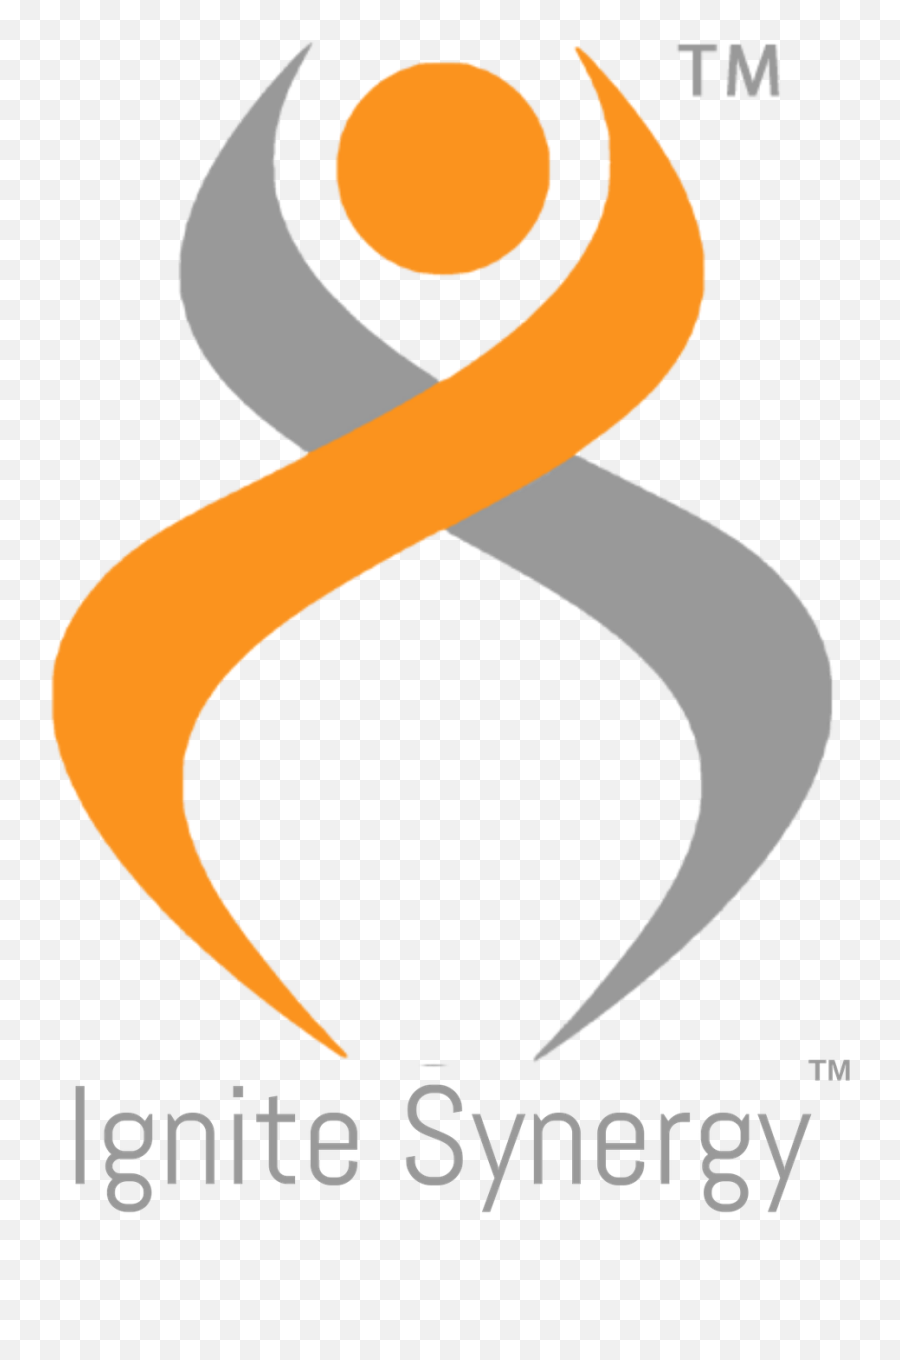 Ignite Synergy Application Development Based In Austin Tx Emoji,Ignited Logo